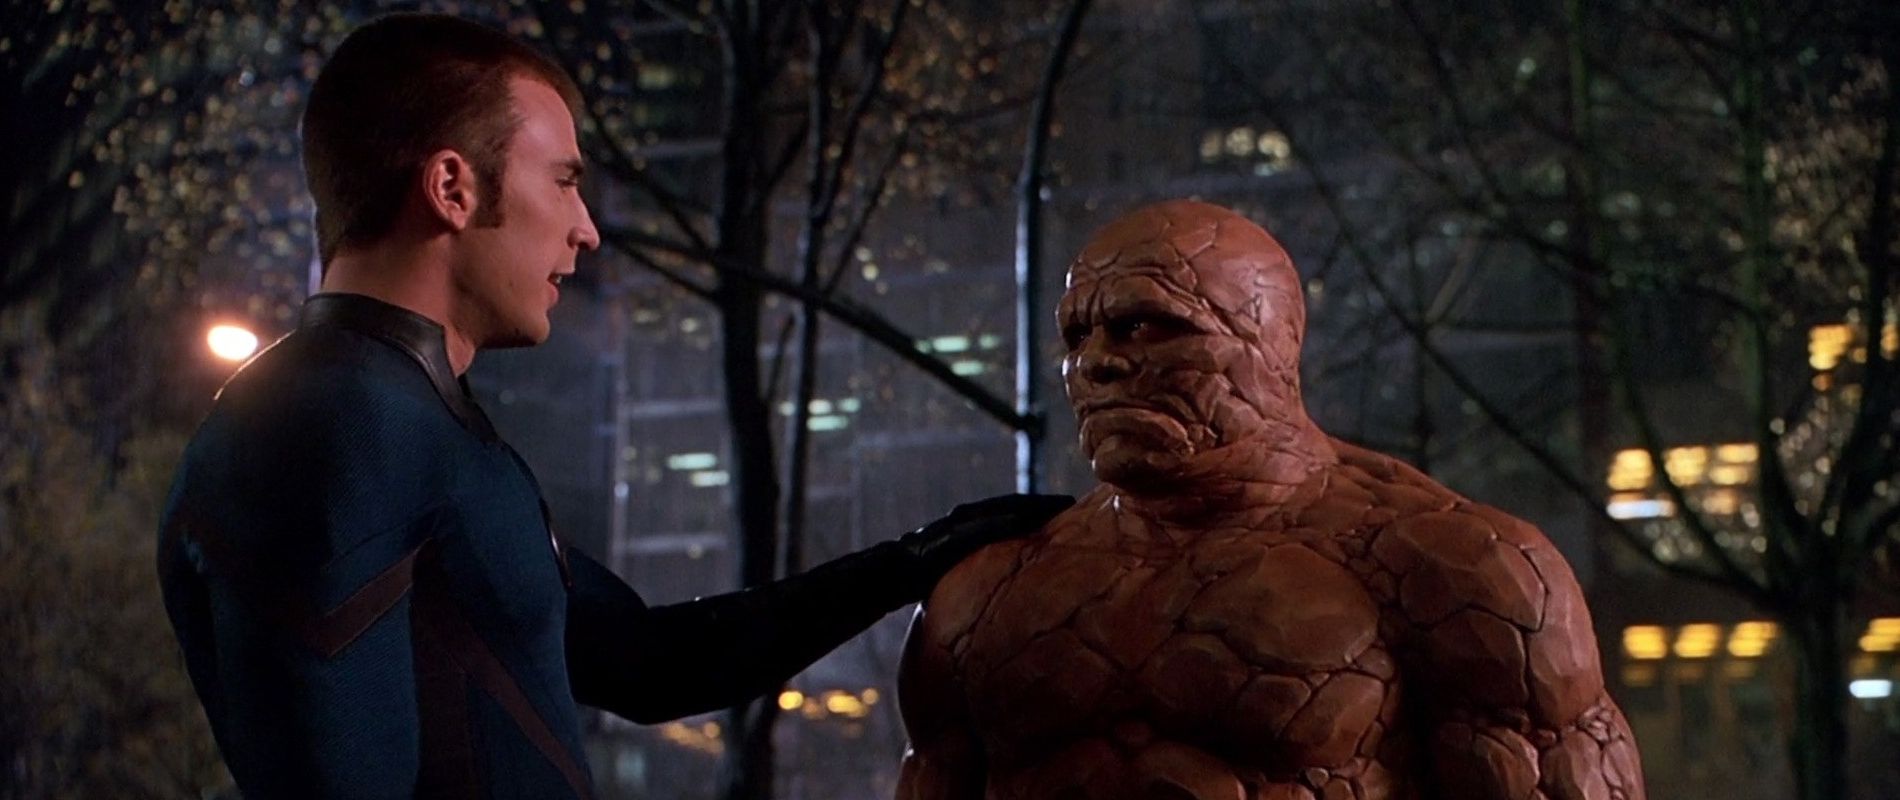 Johnny Storm (Chris Evans) puts his arm on the shoulder of Ben Grimm (Michael Chiklis) in Fantastic Four